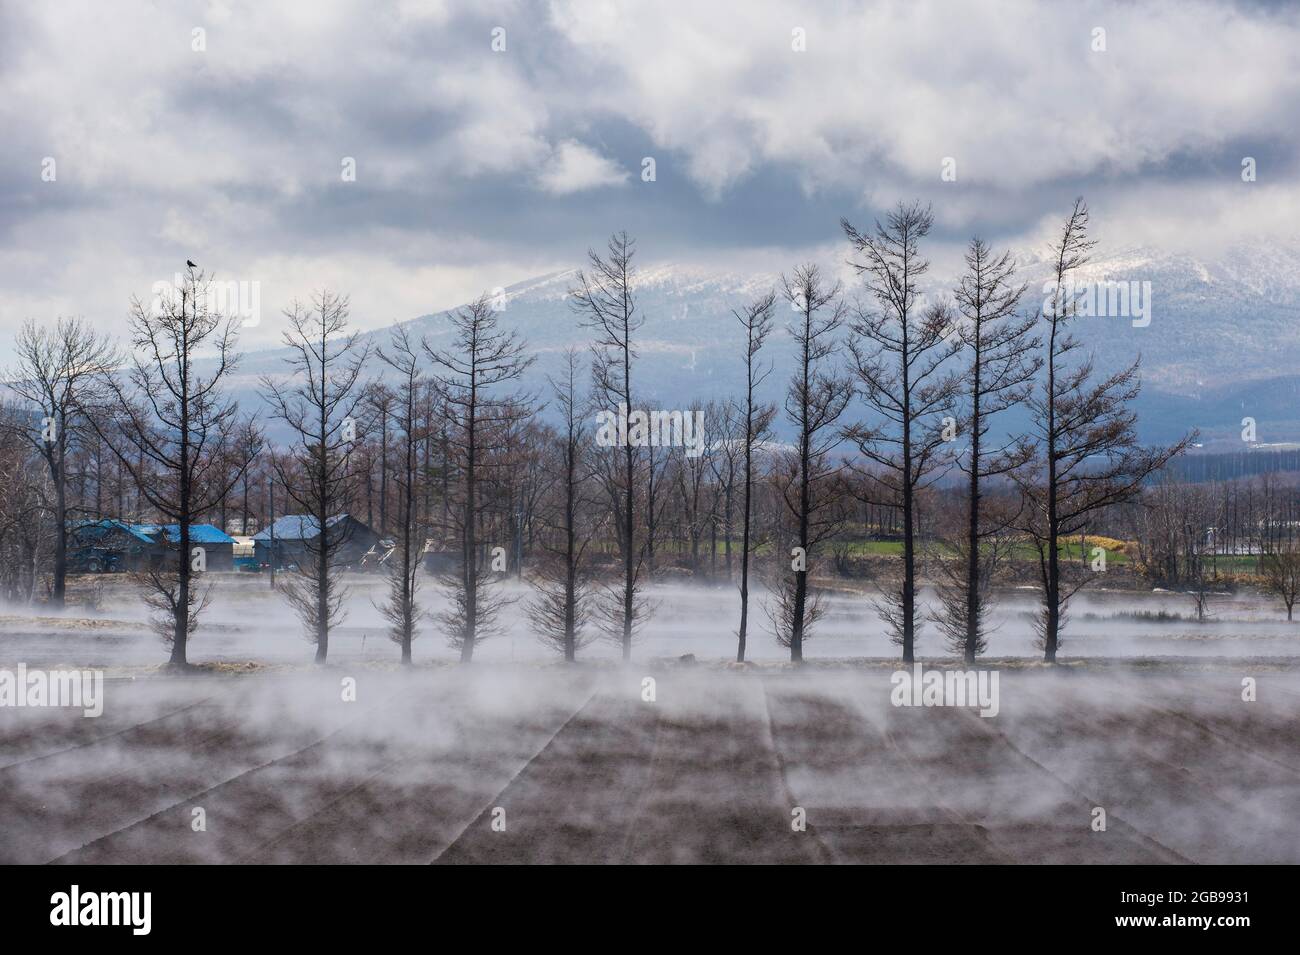 Trees standing in vaporation from the warm ground, Unesco world heritage site Shiretoko National Park, Hokkaido, Japan Stock Photo